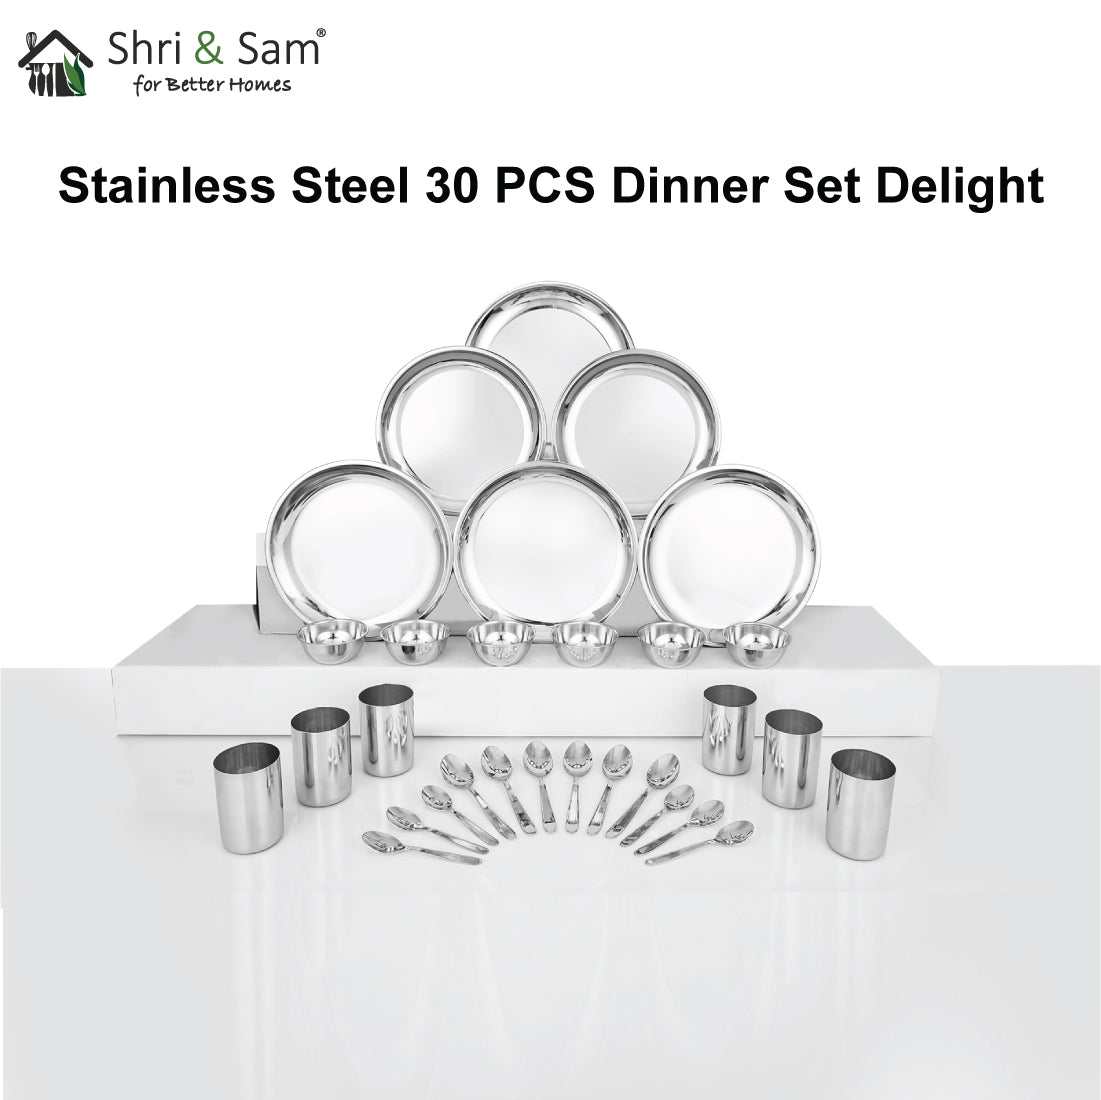 Stainless Steel 30 PCS Dinner set (6 People) Delight